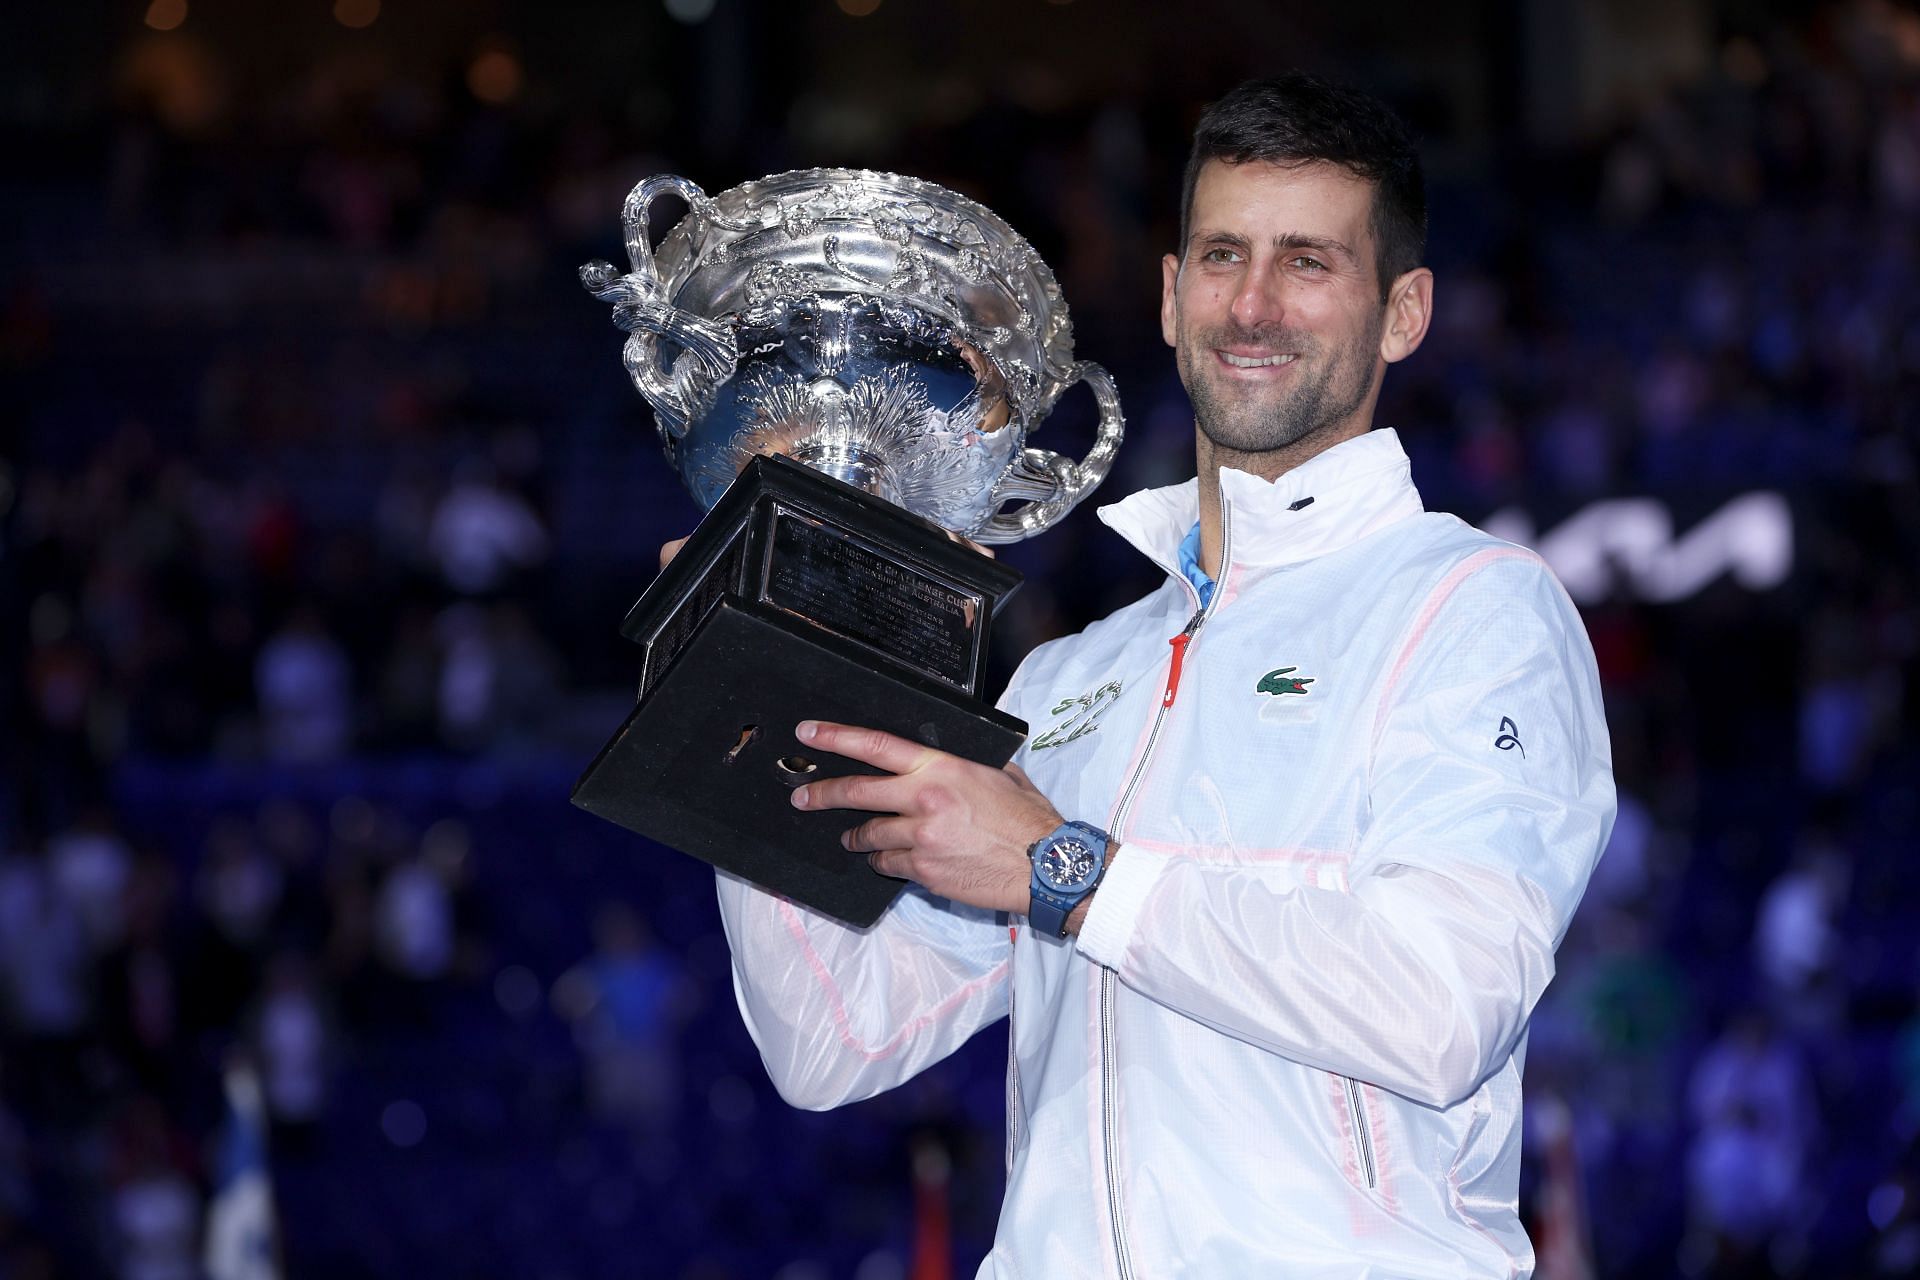 Novak Djokovic won his tenth Australian Open title.